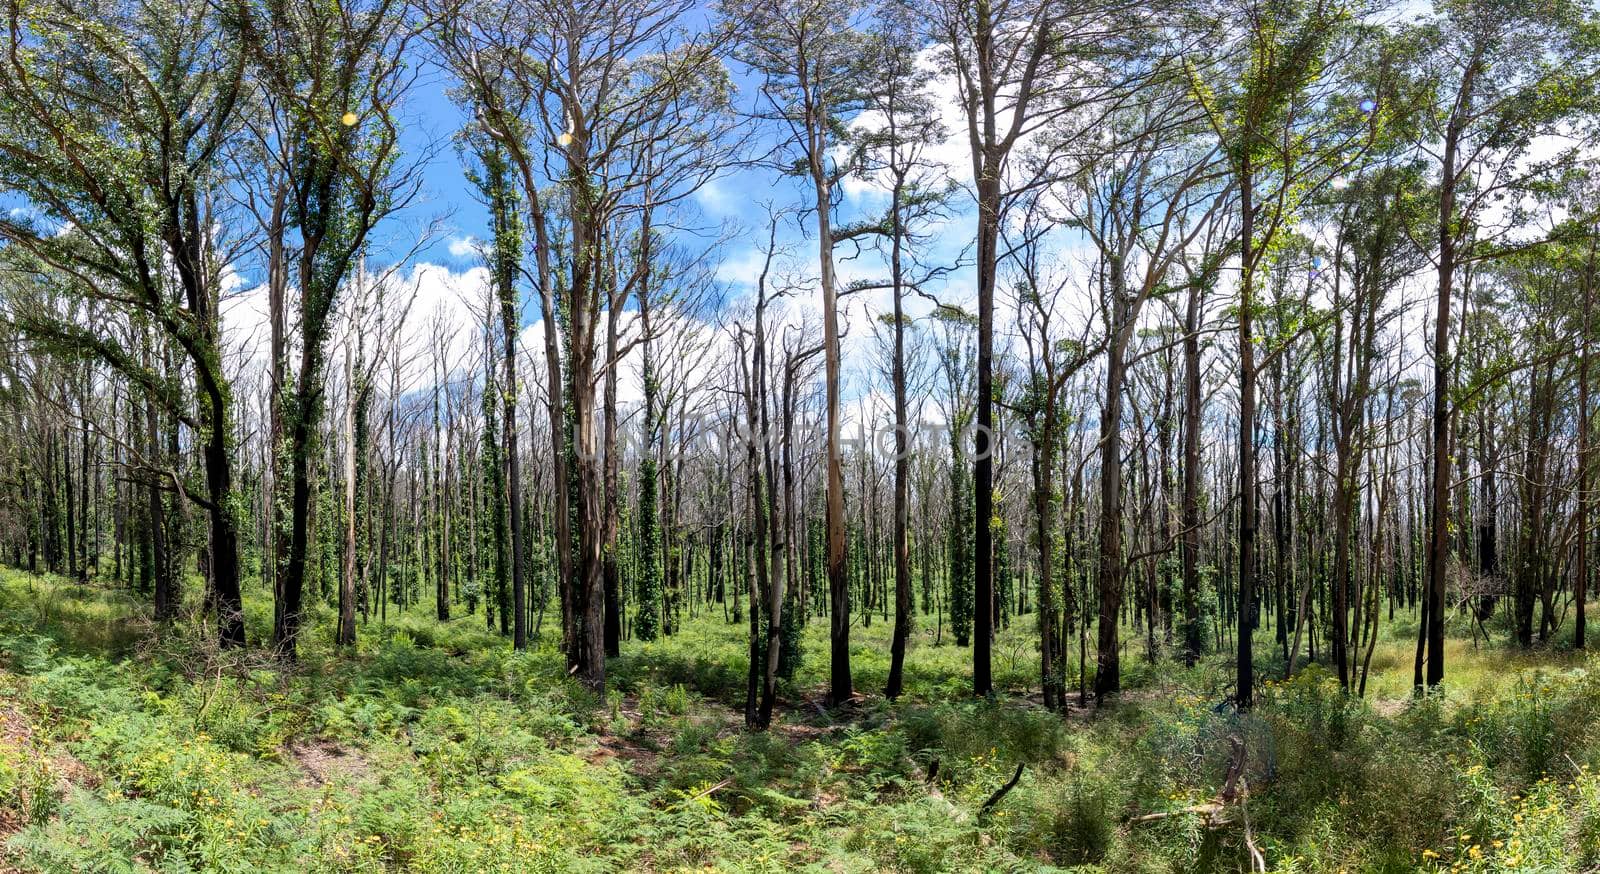 Forest regeneration after bushfire in Kanangra-Boyd National Park in regional Australia by WittkePhotos